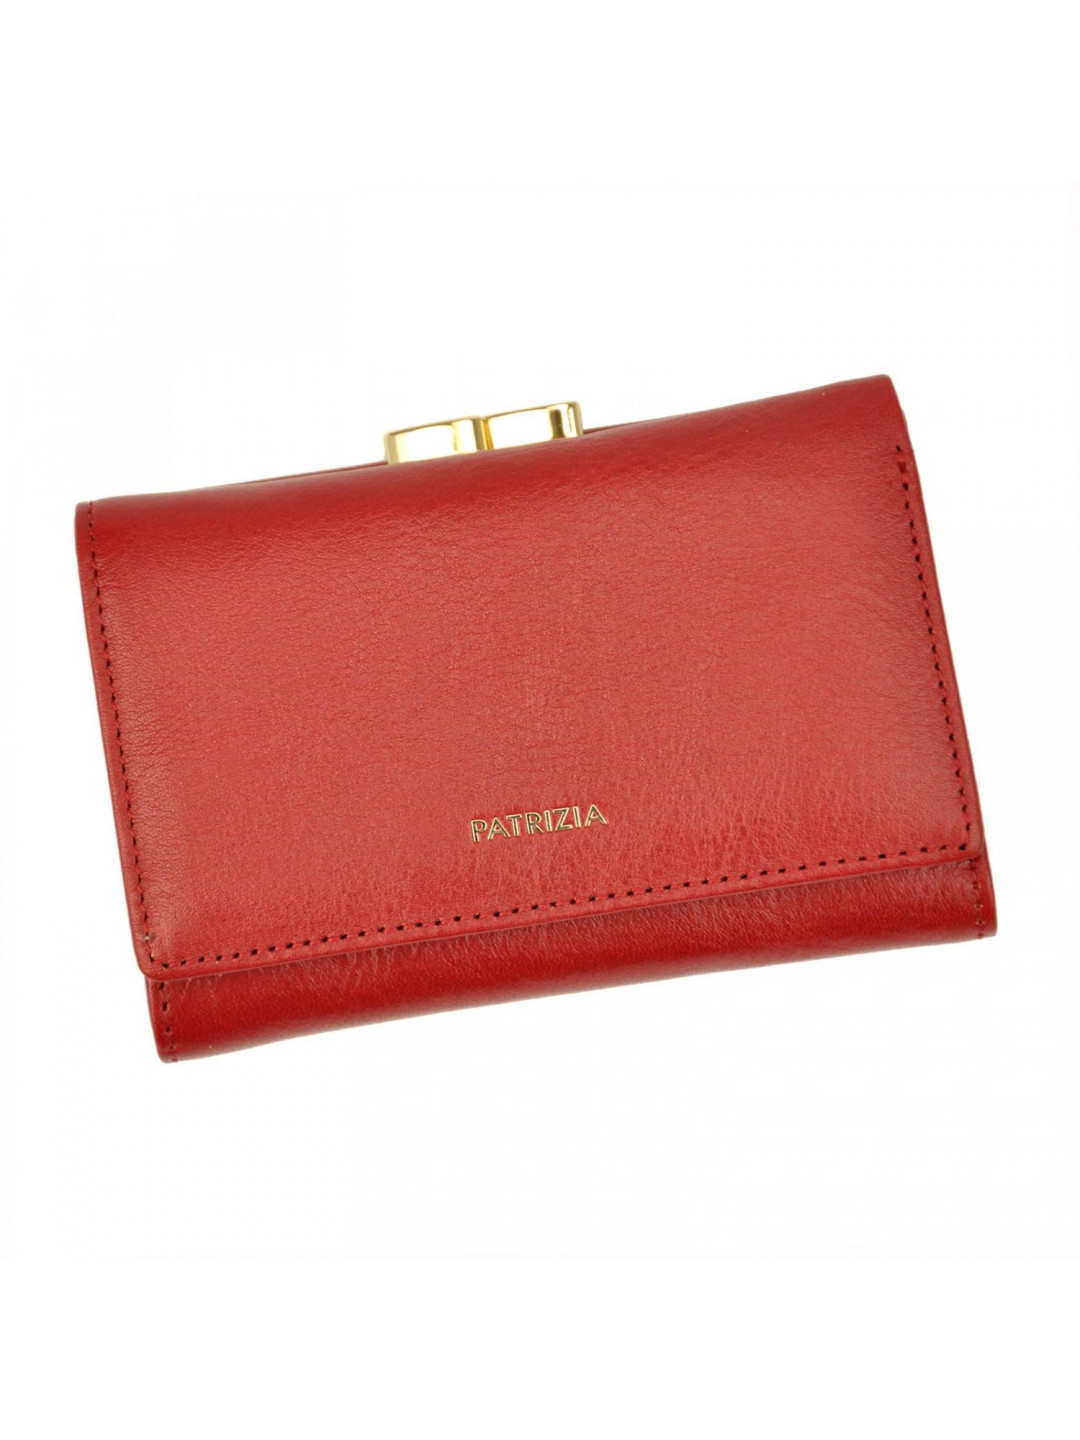 Dámská kožená peněženka červená – Patrizia Florencia